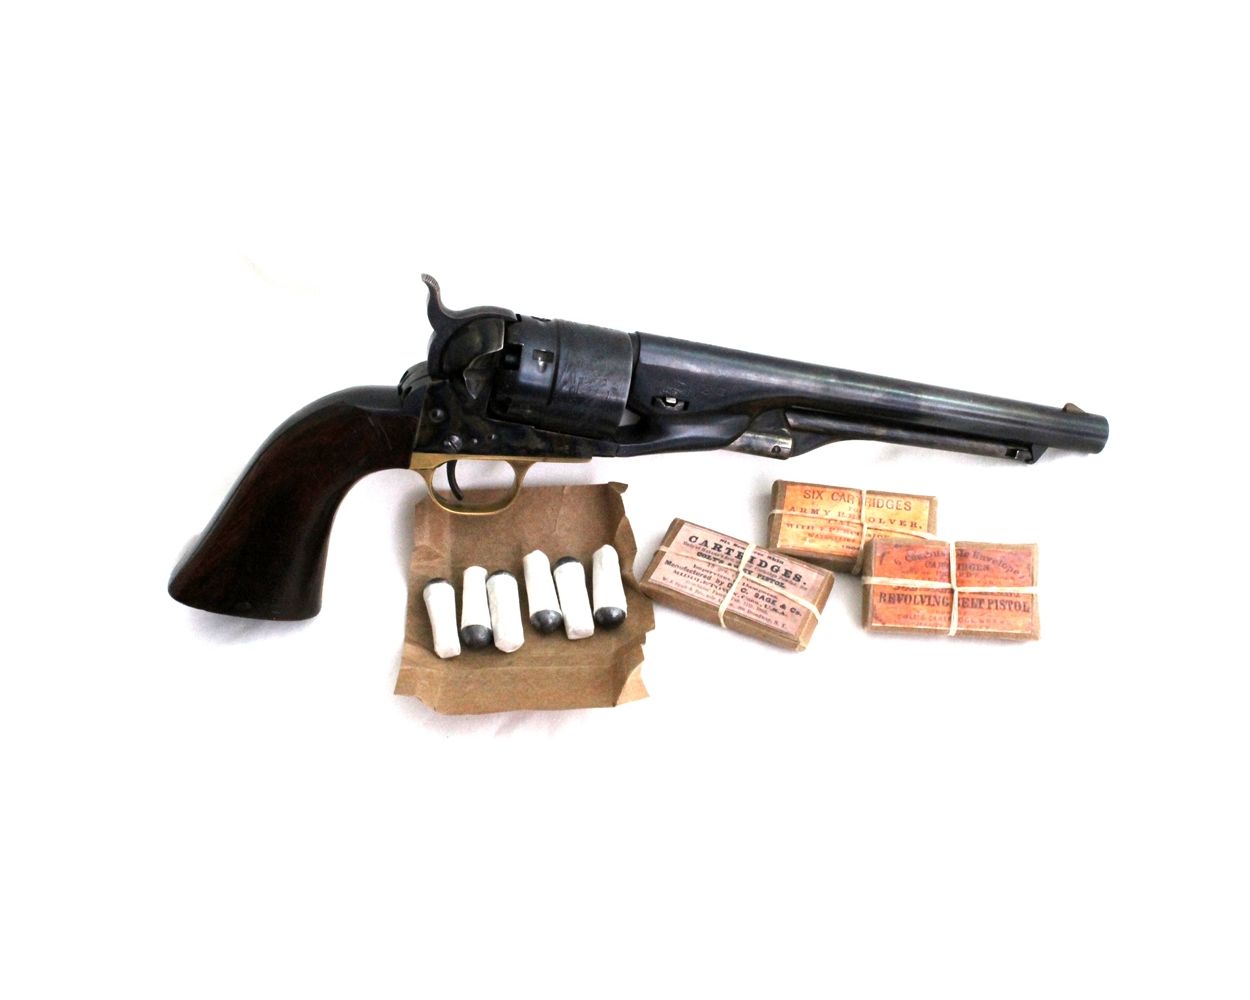 Black Powder Guns for Sale - Muzzleloading Rifles, Revolvers